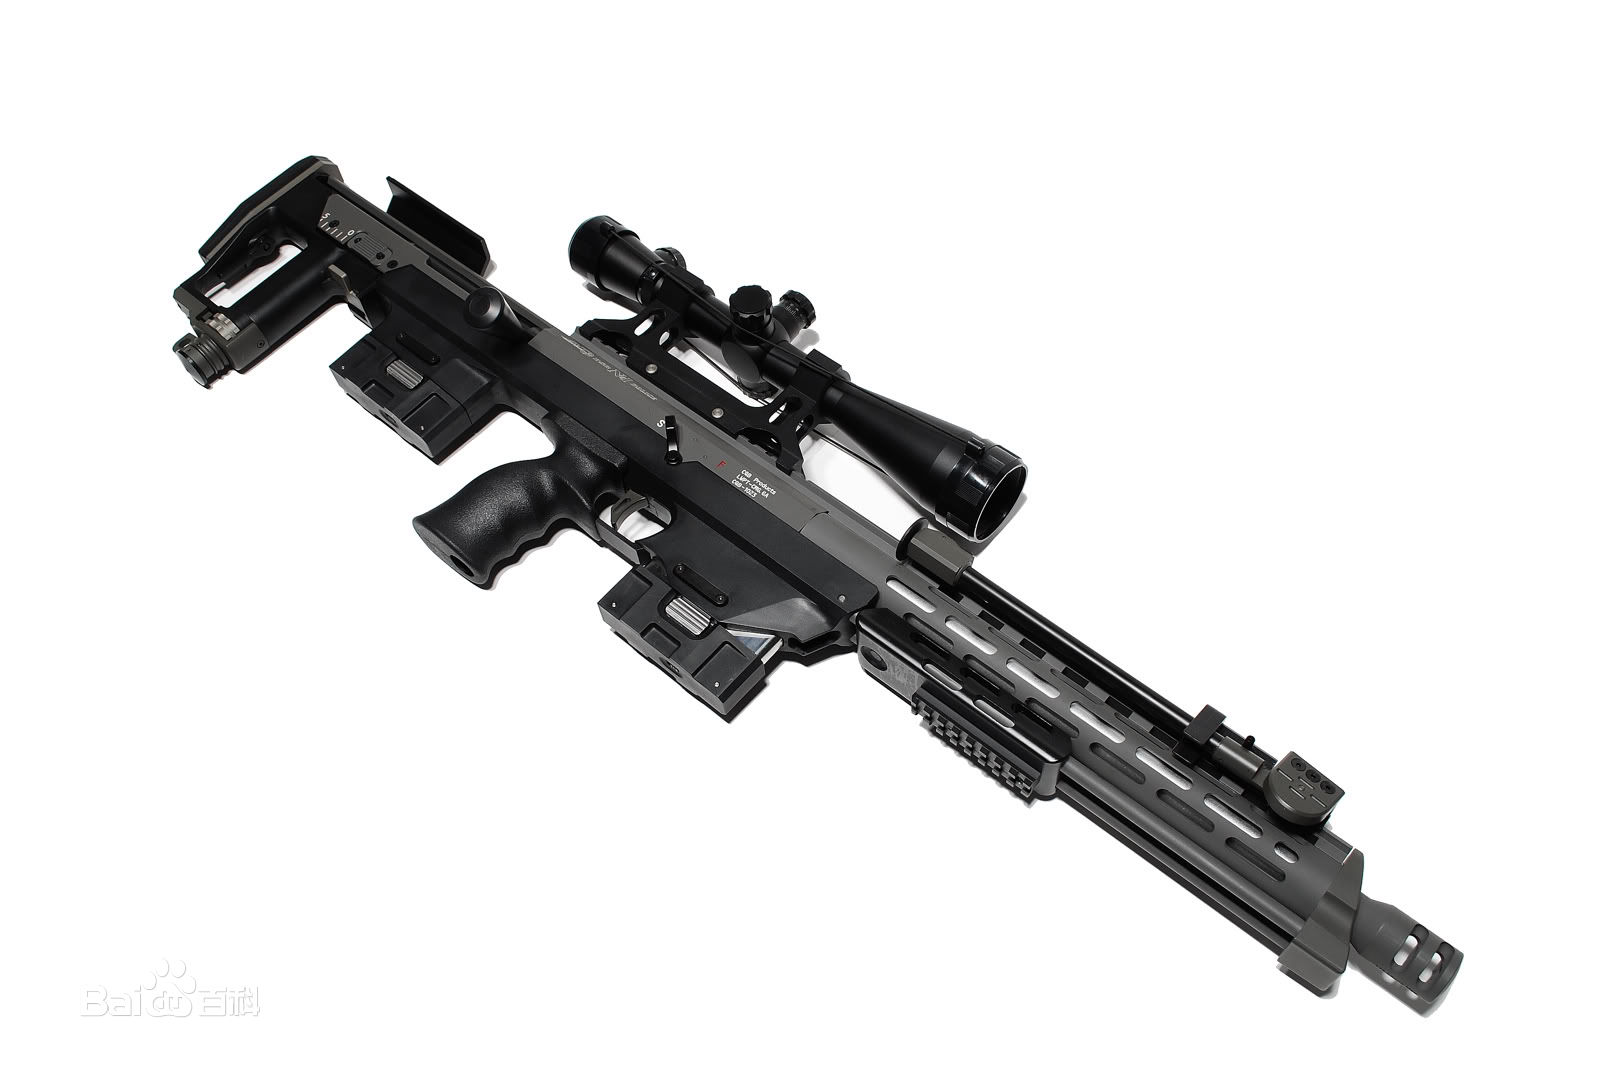 DSR-1狙擊步槍